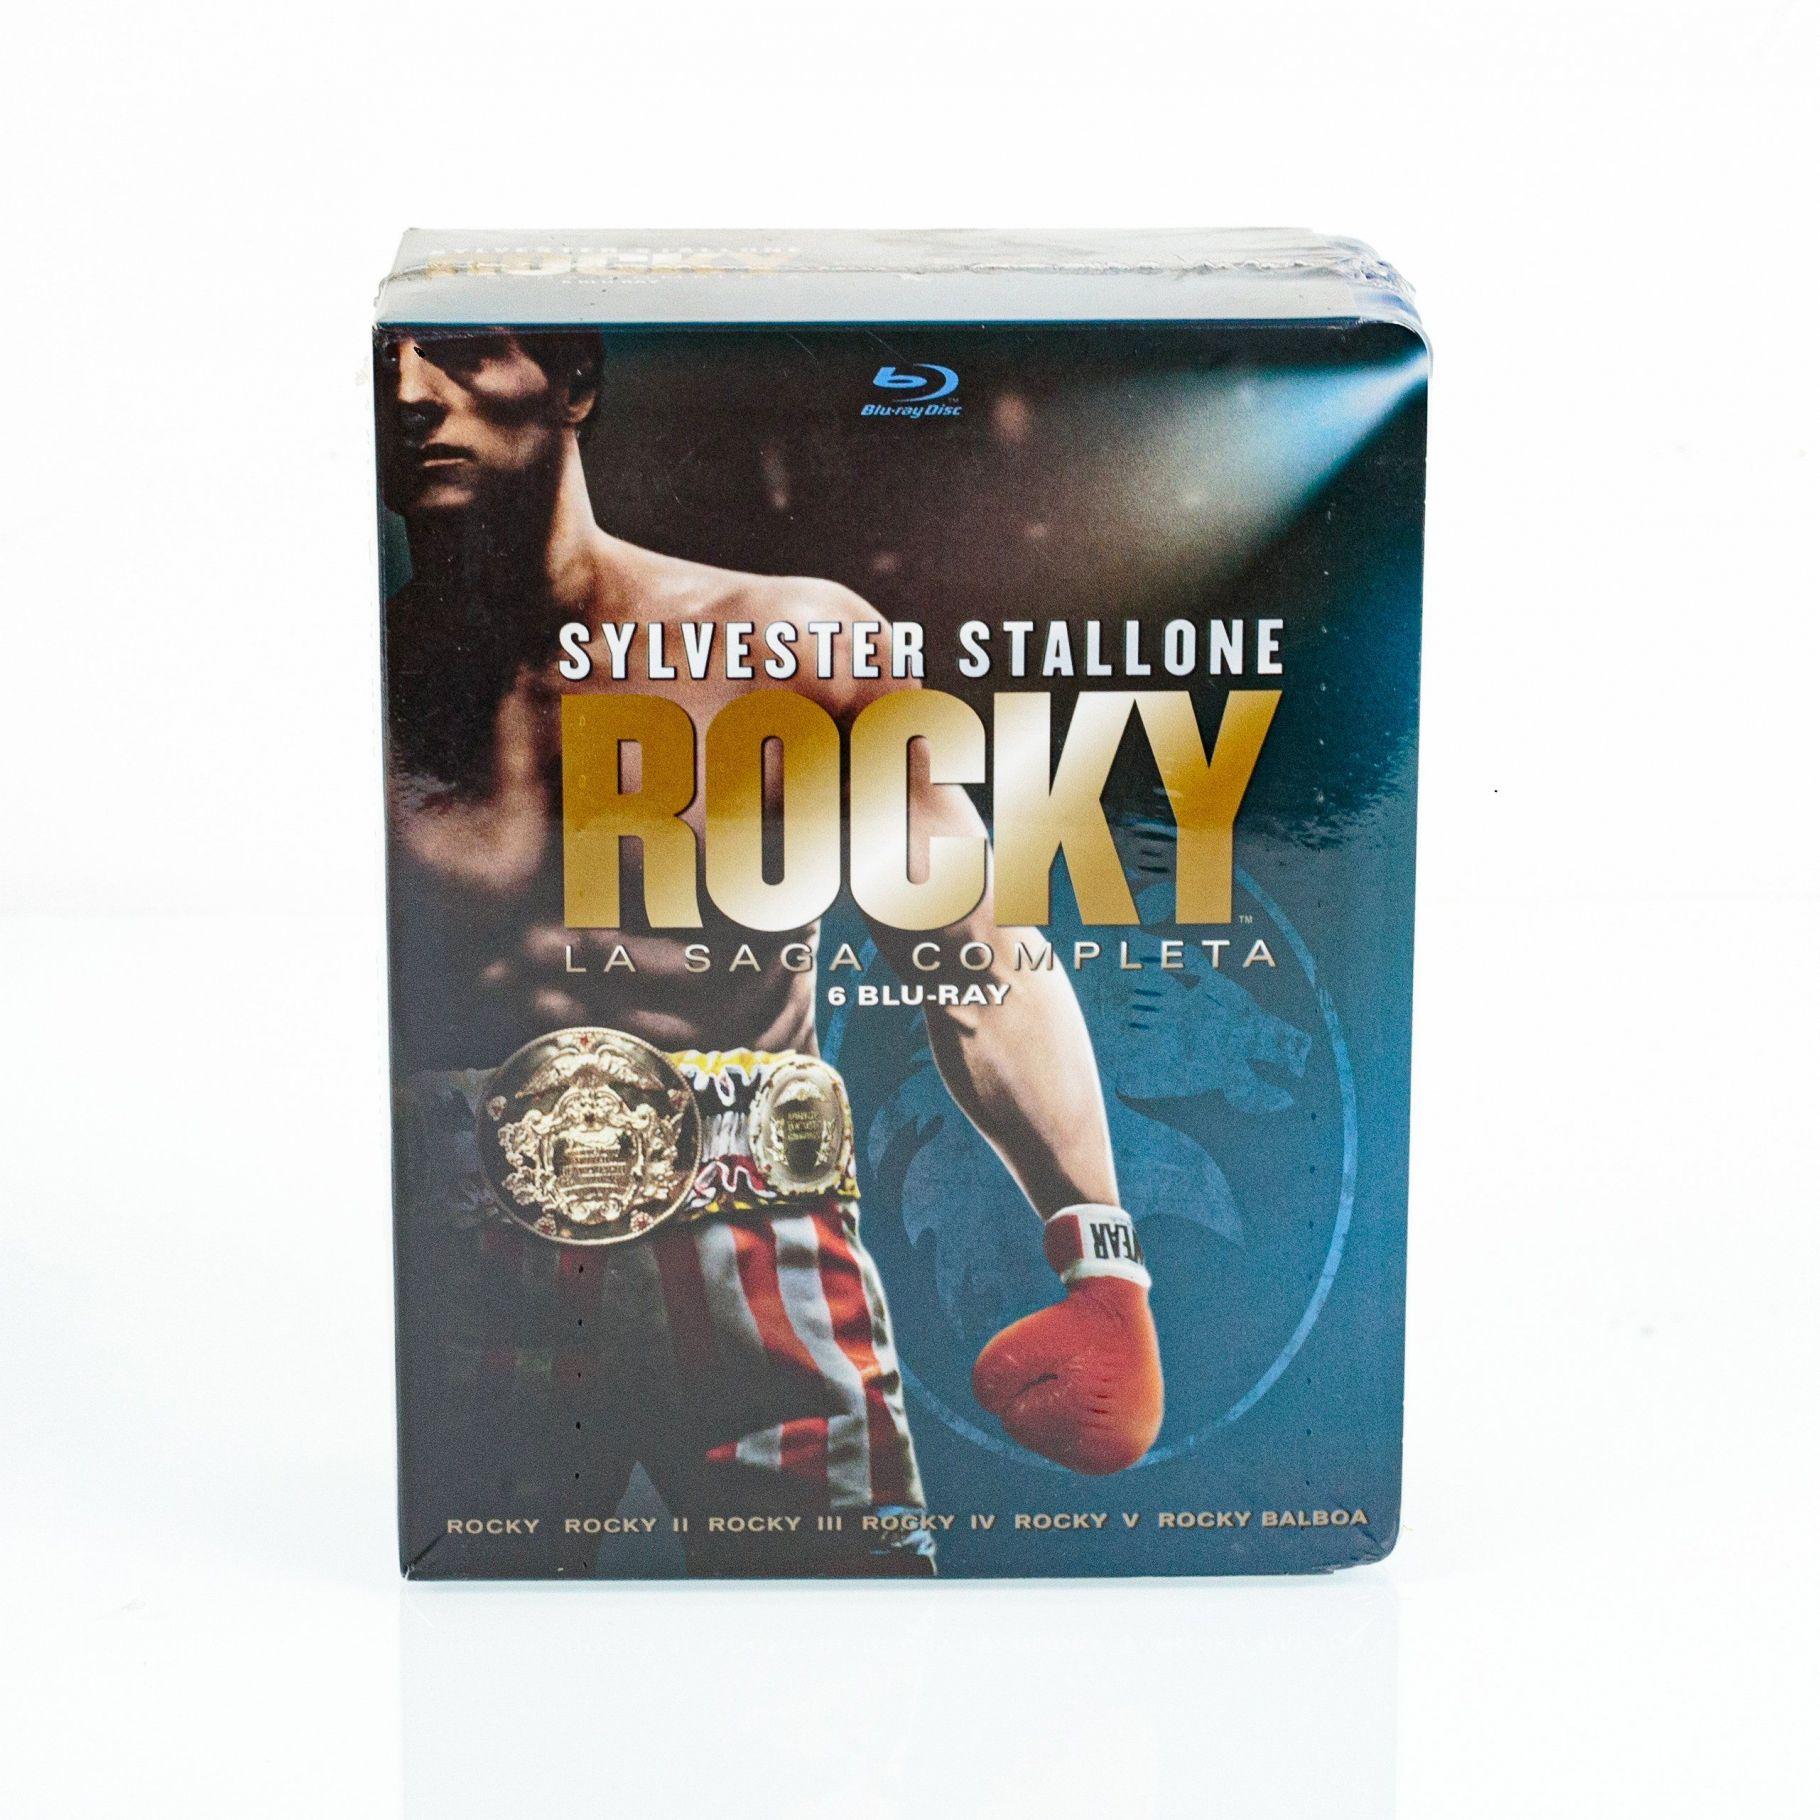 Bluray “Rocky” Silvester Stallone Box set